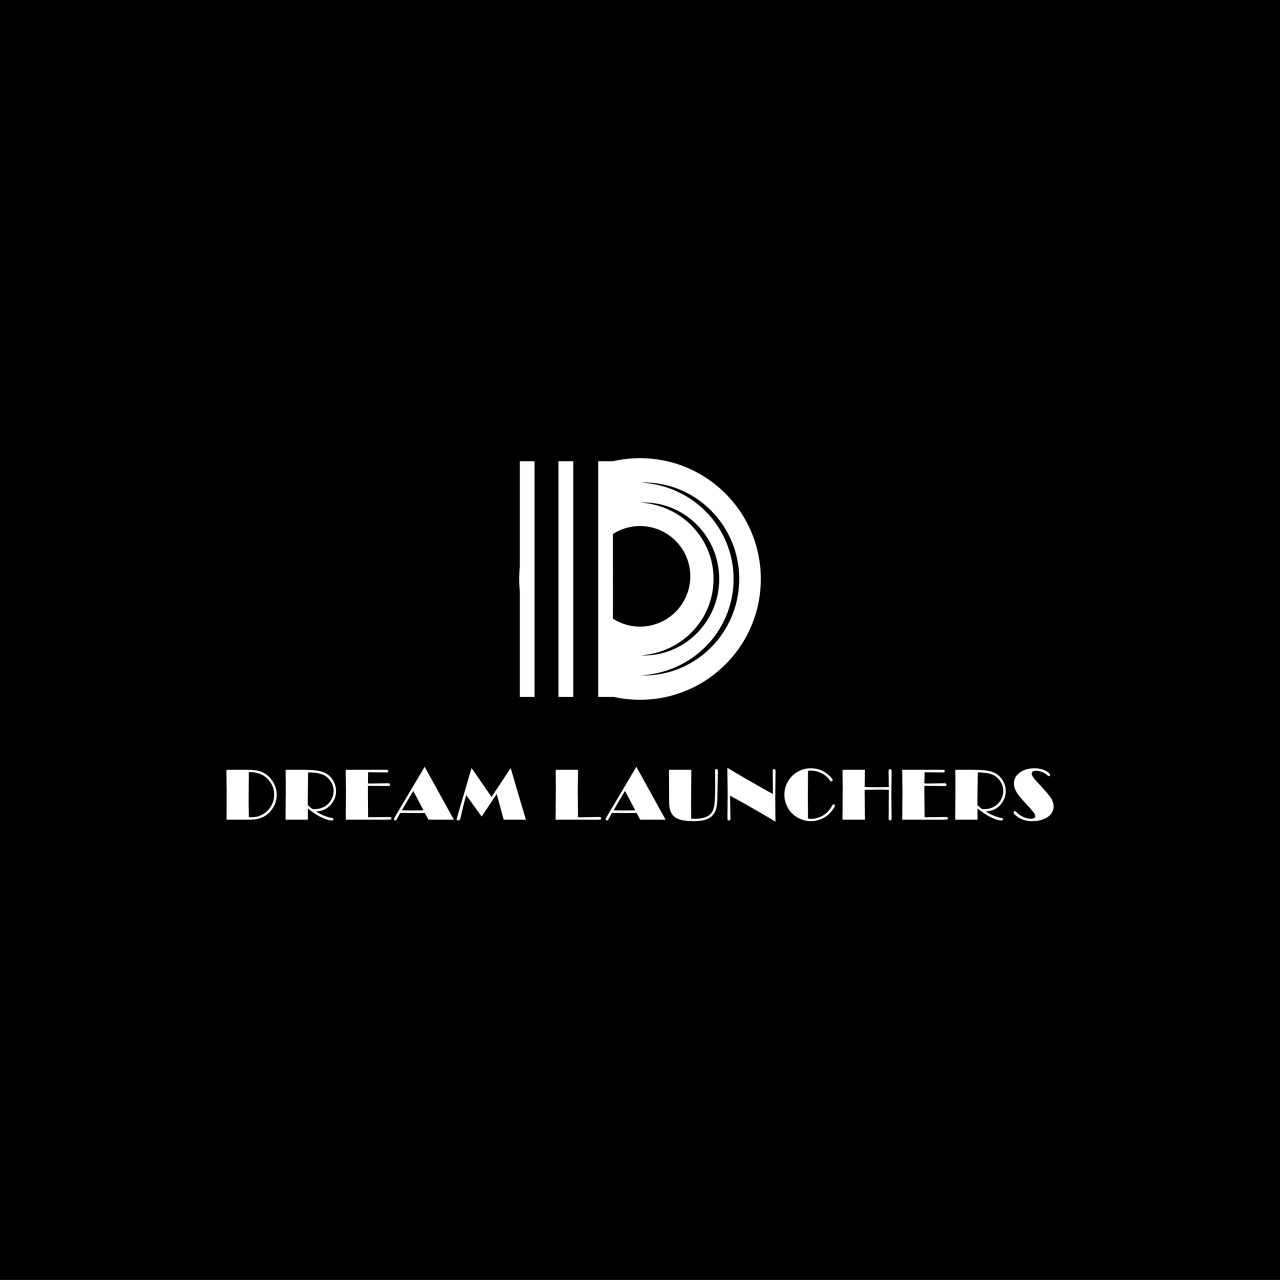 Dreamlaunchers logo black